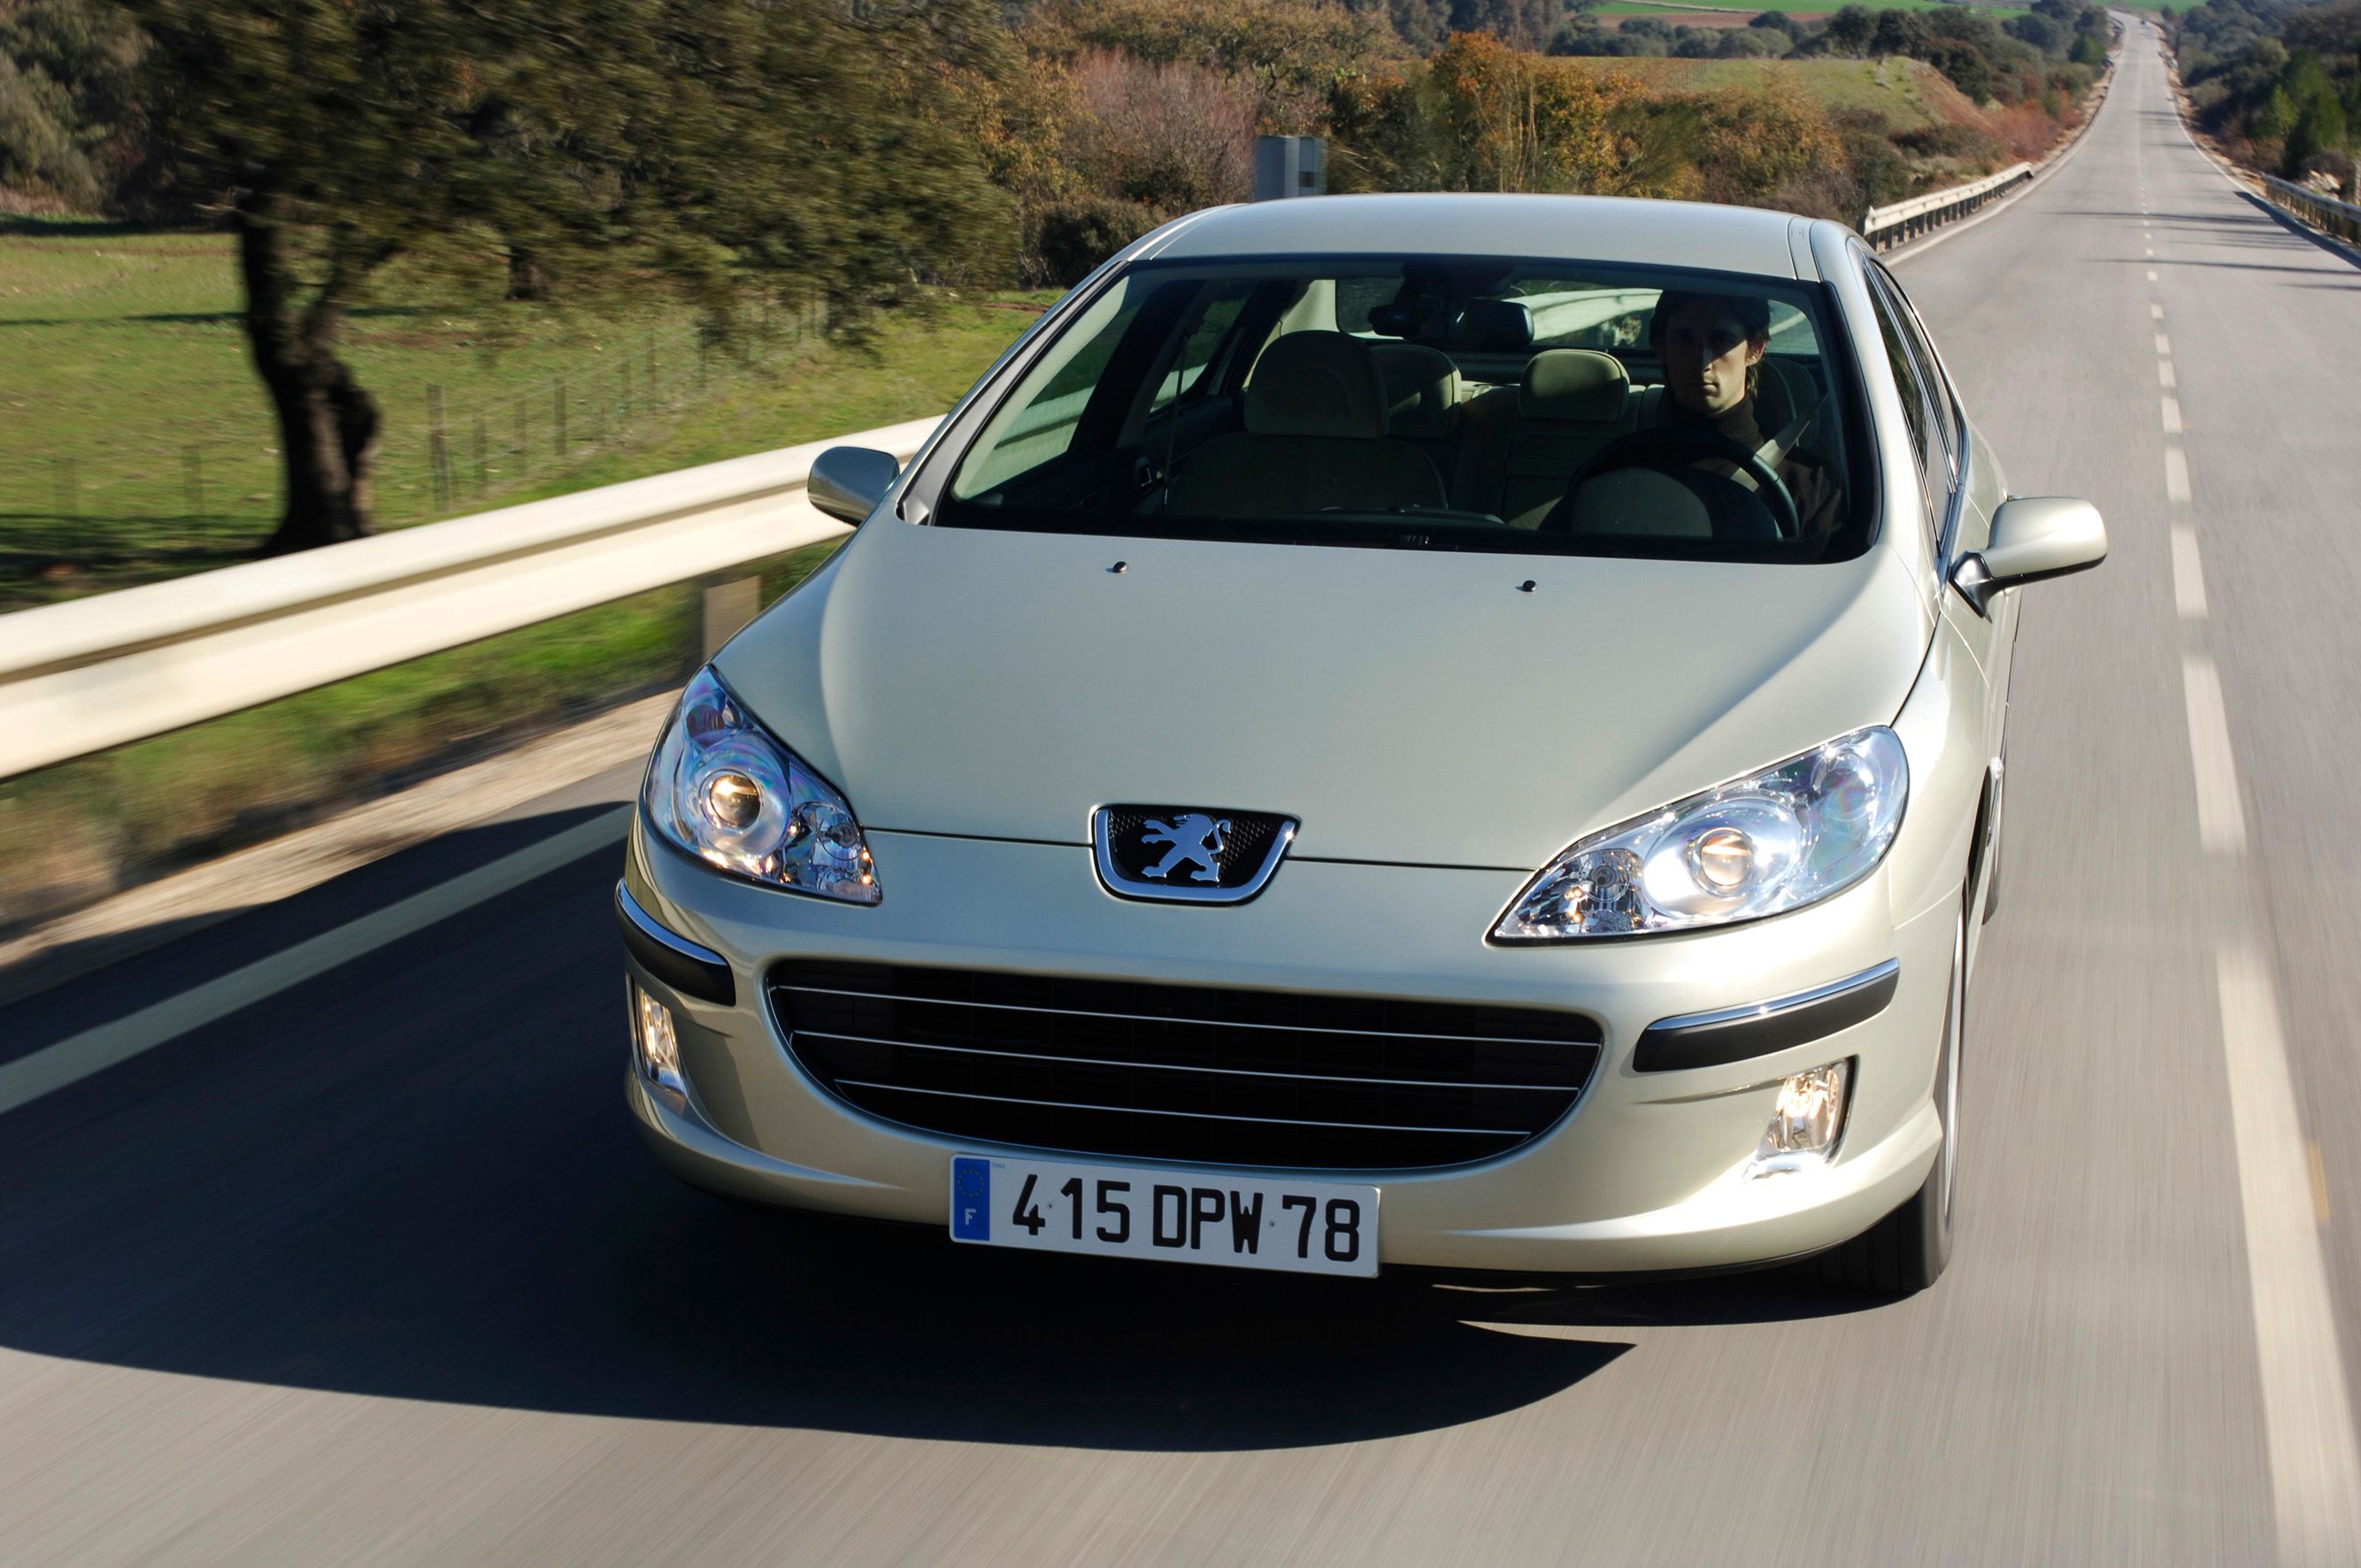 Peugeot 407 (2004 -2011) used car review, Car review